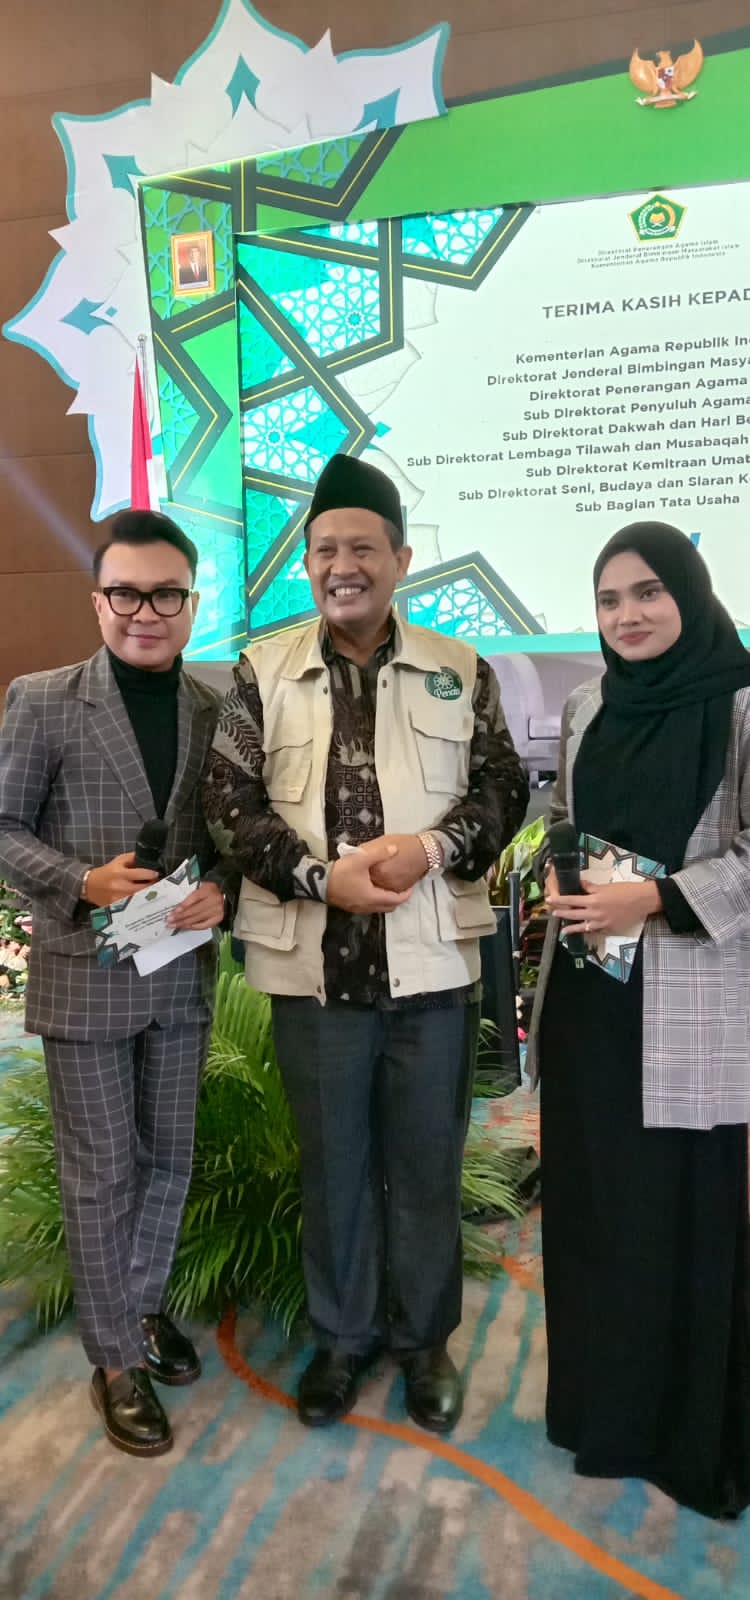 Ziyya Zarifa, Moderat Millenial Agent Perwakilan Aceh